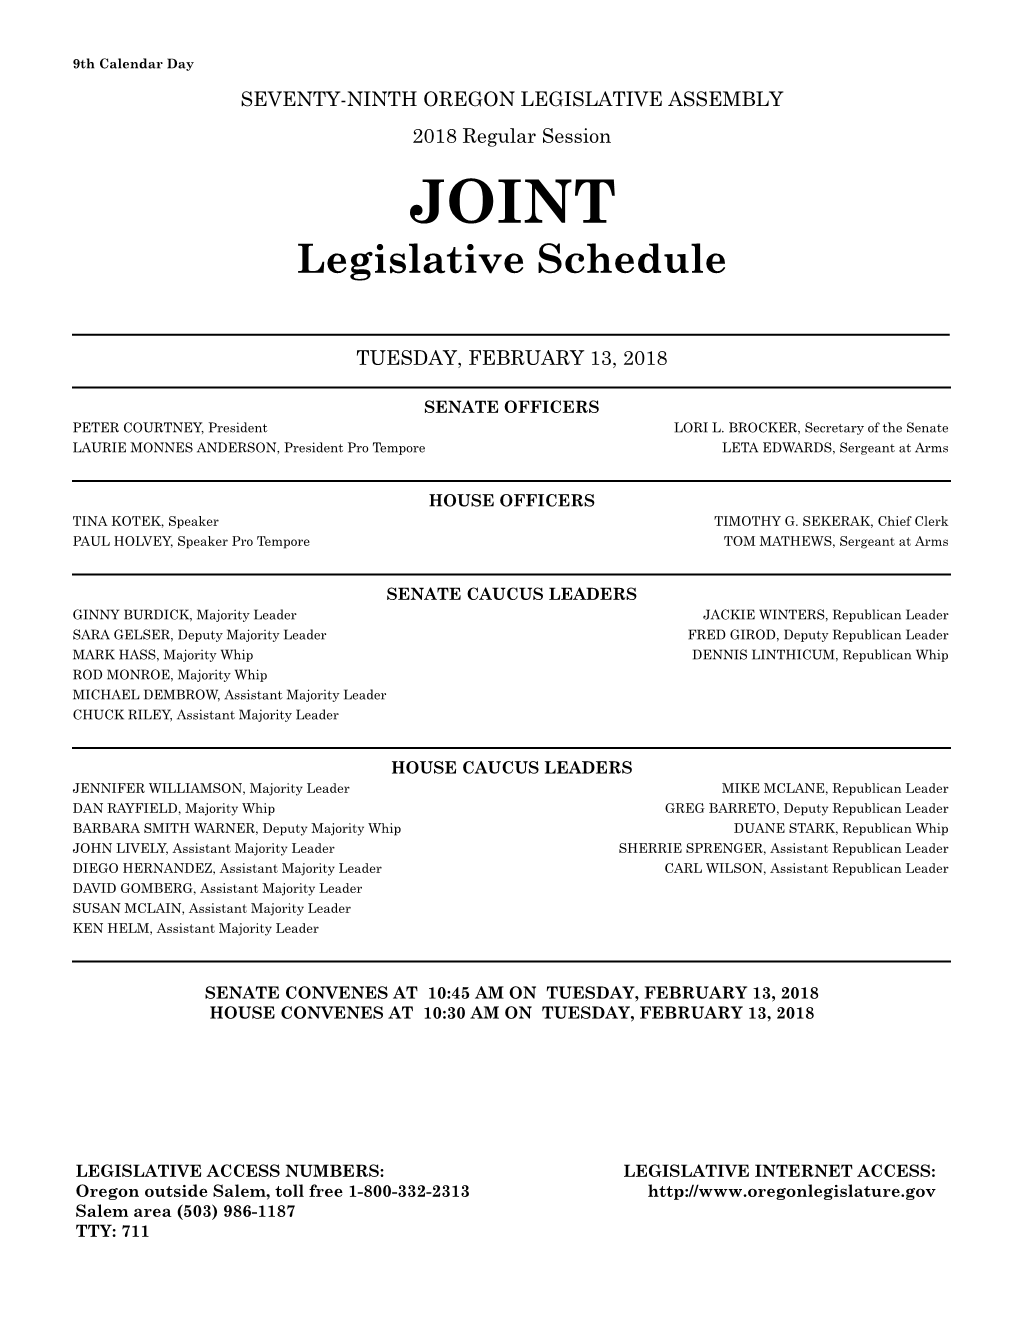 Legislative Schedule